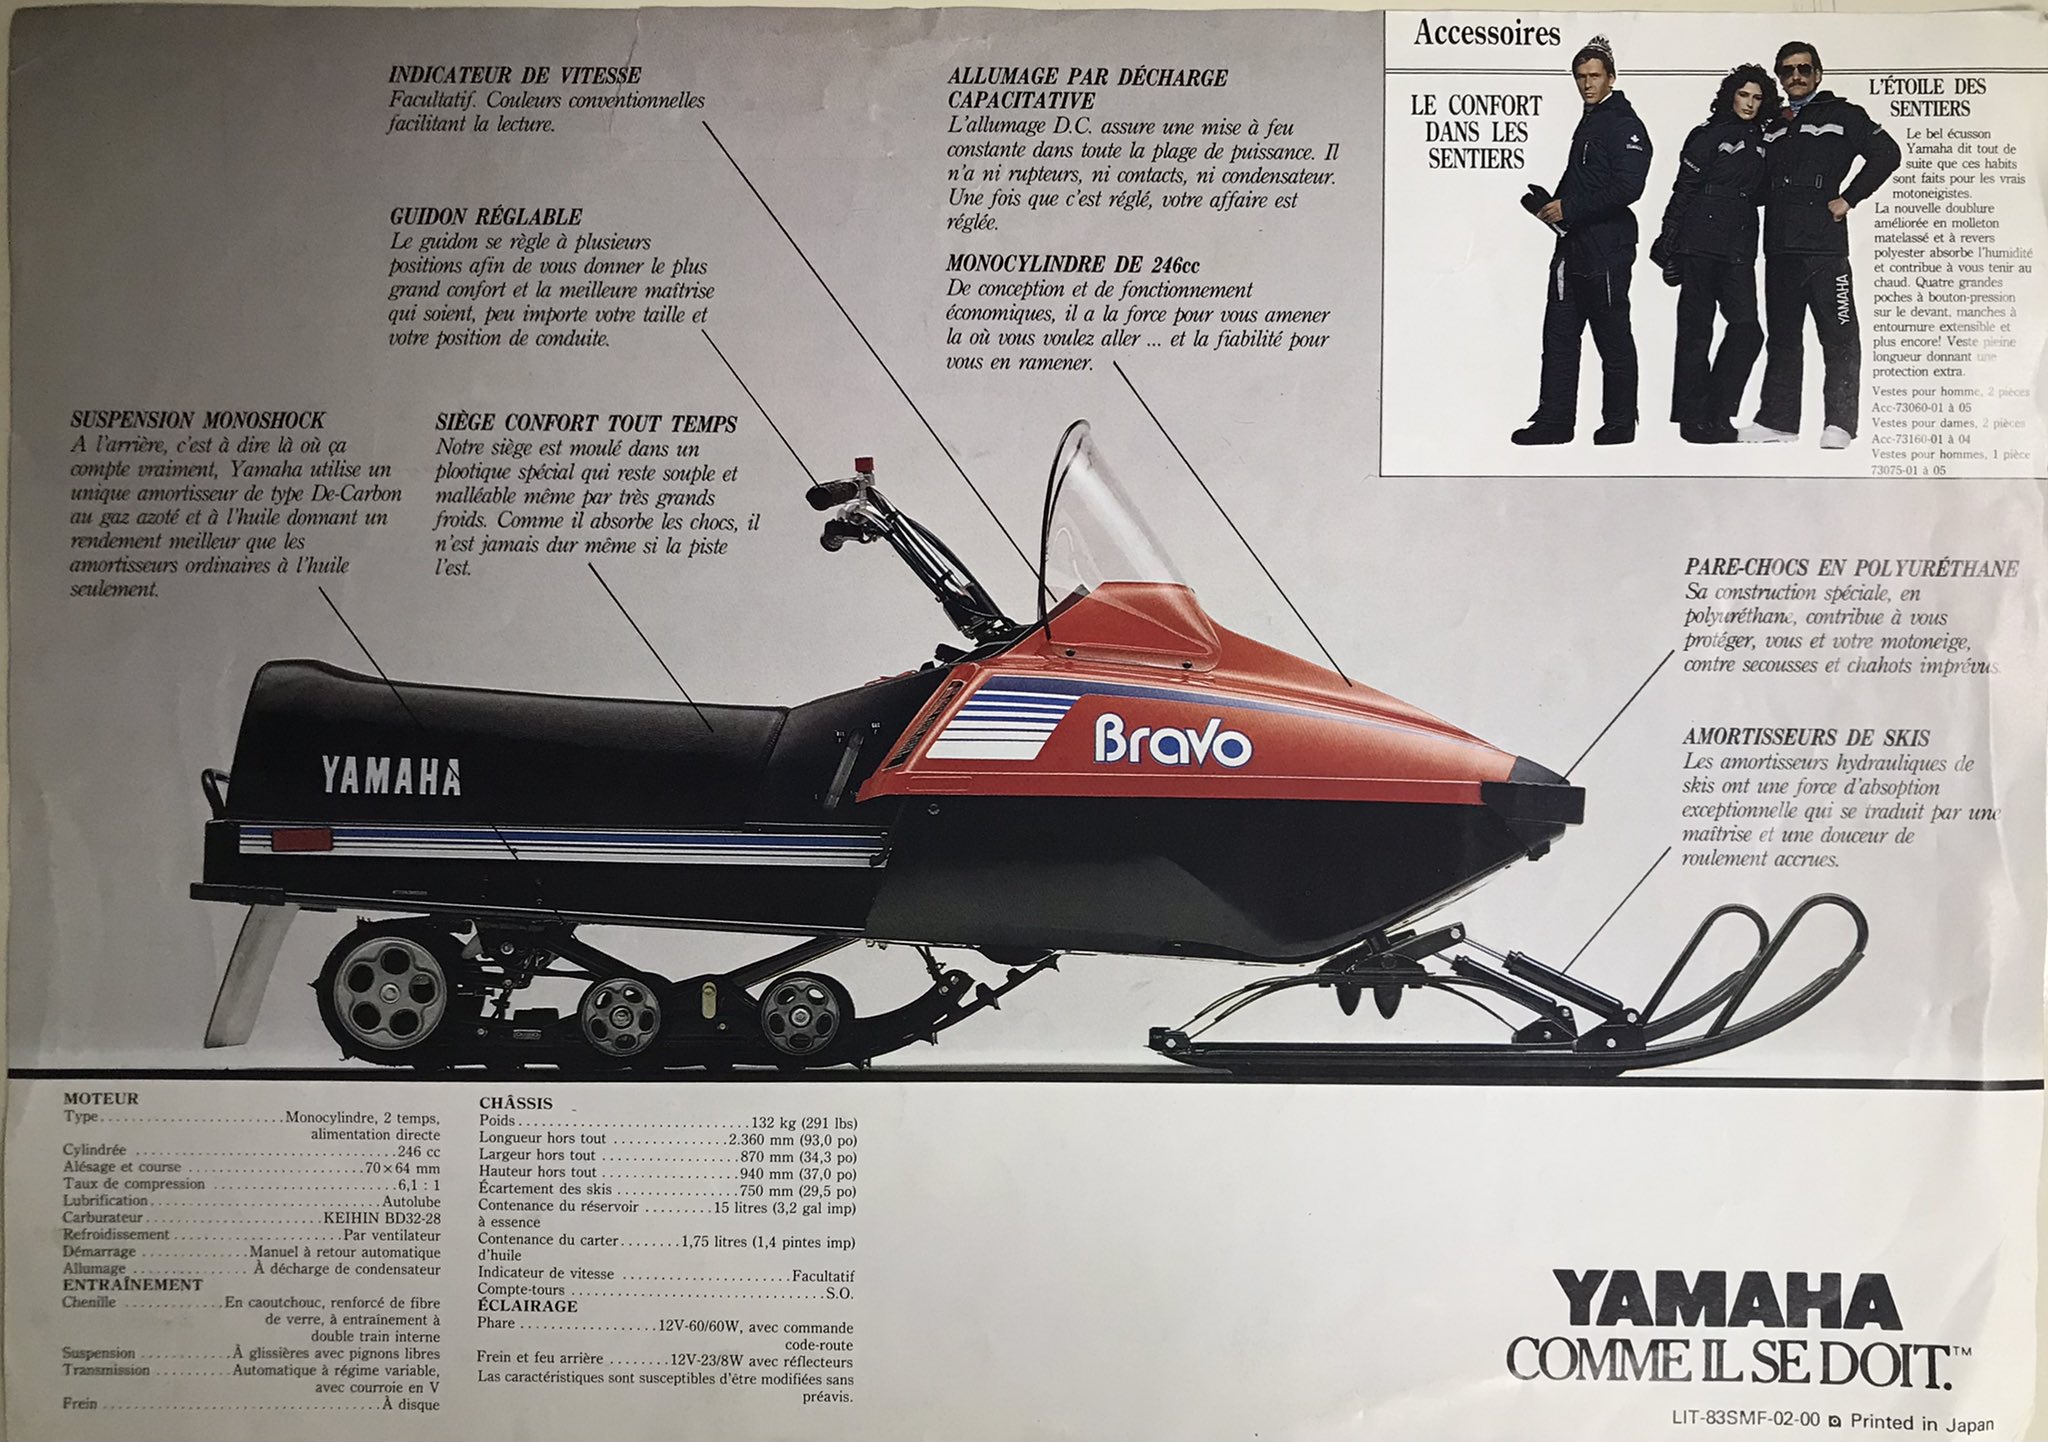 Yamaha Bravo 1983 FO4U6ZhWUAM2O7Y?format=jpg&name=large